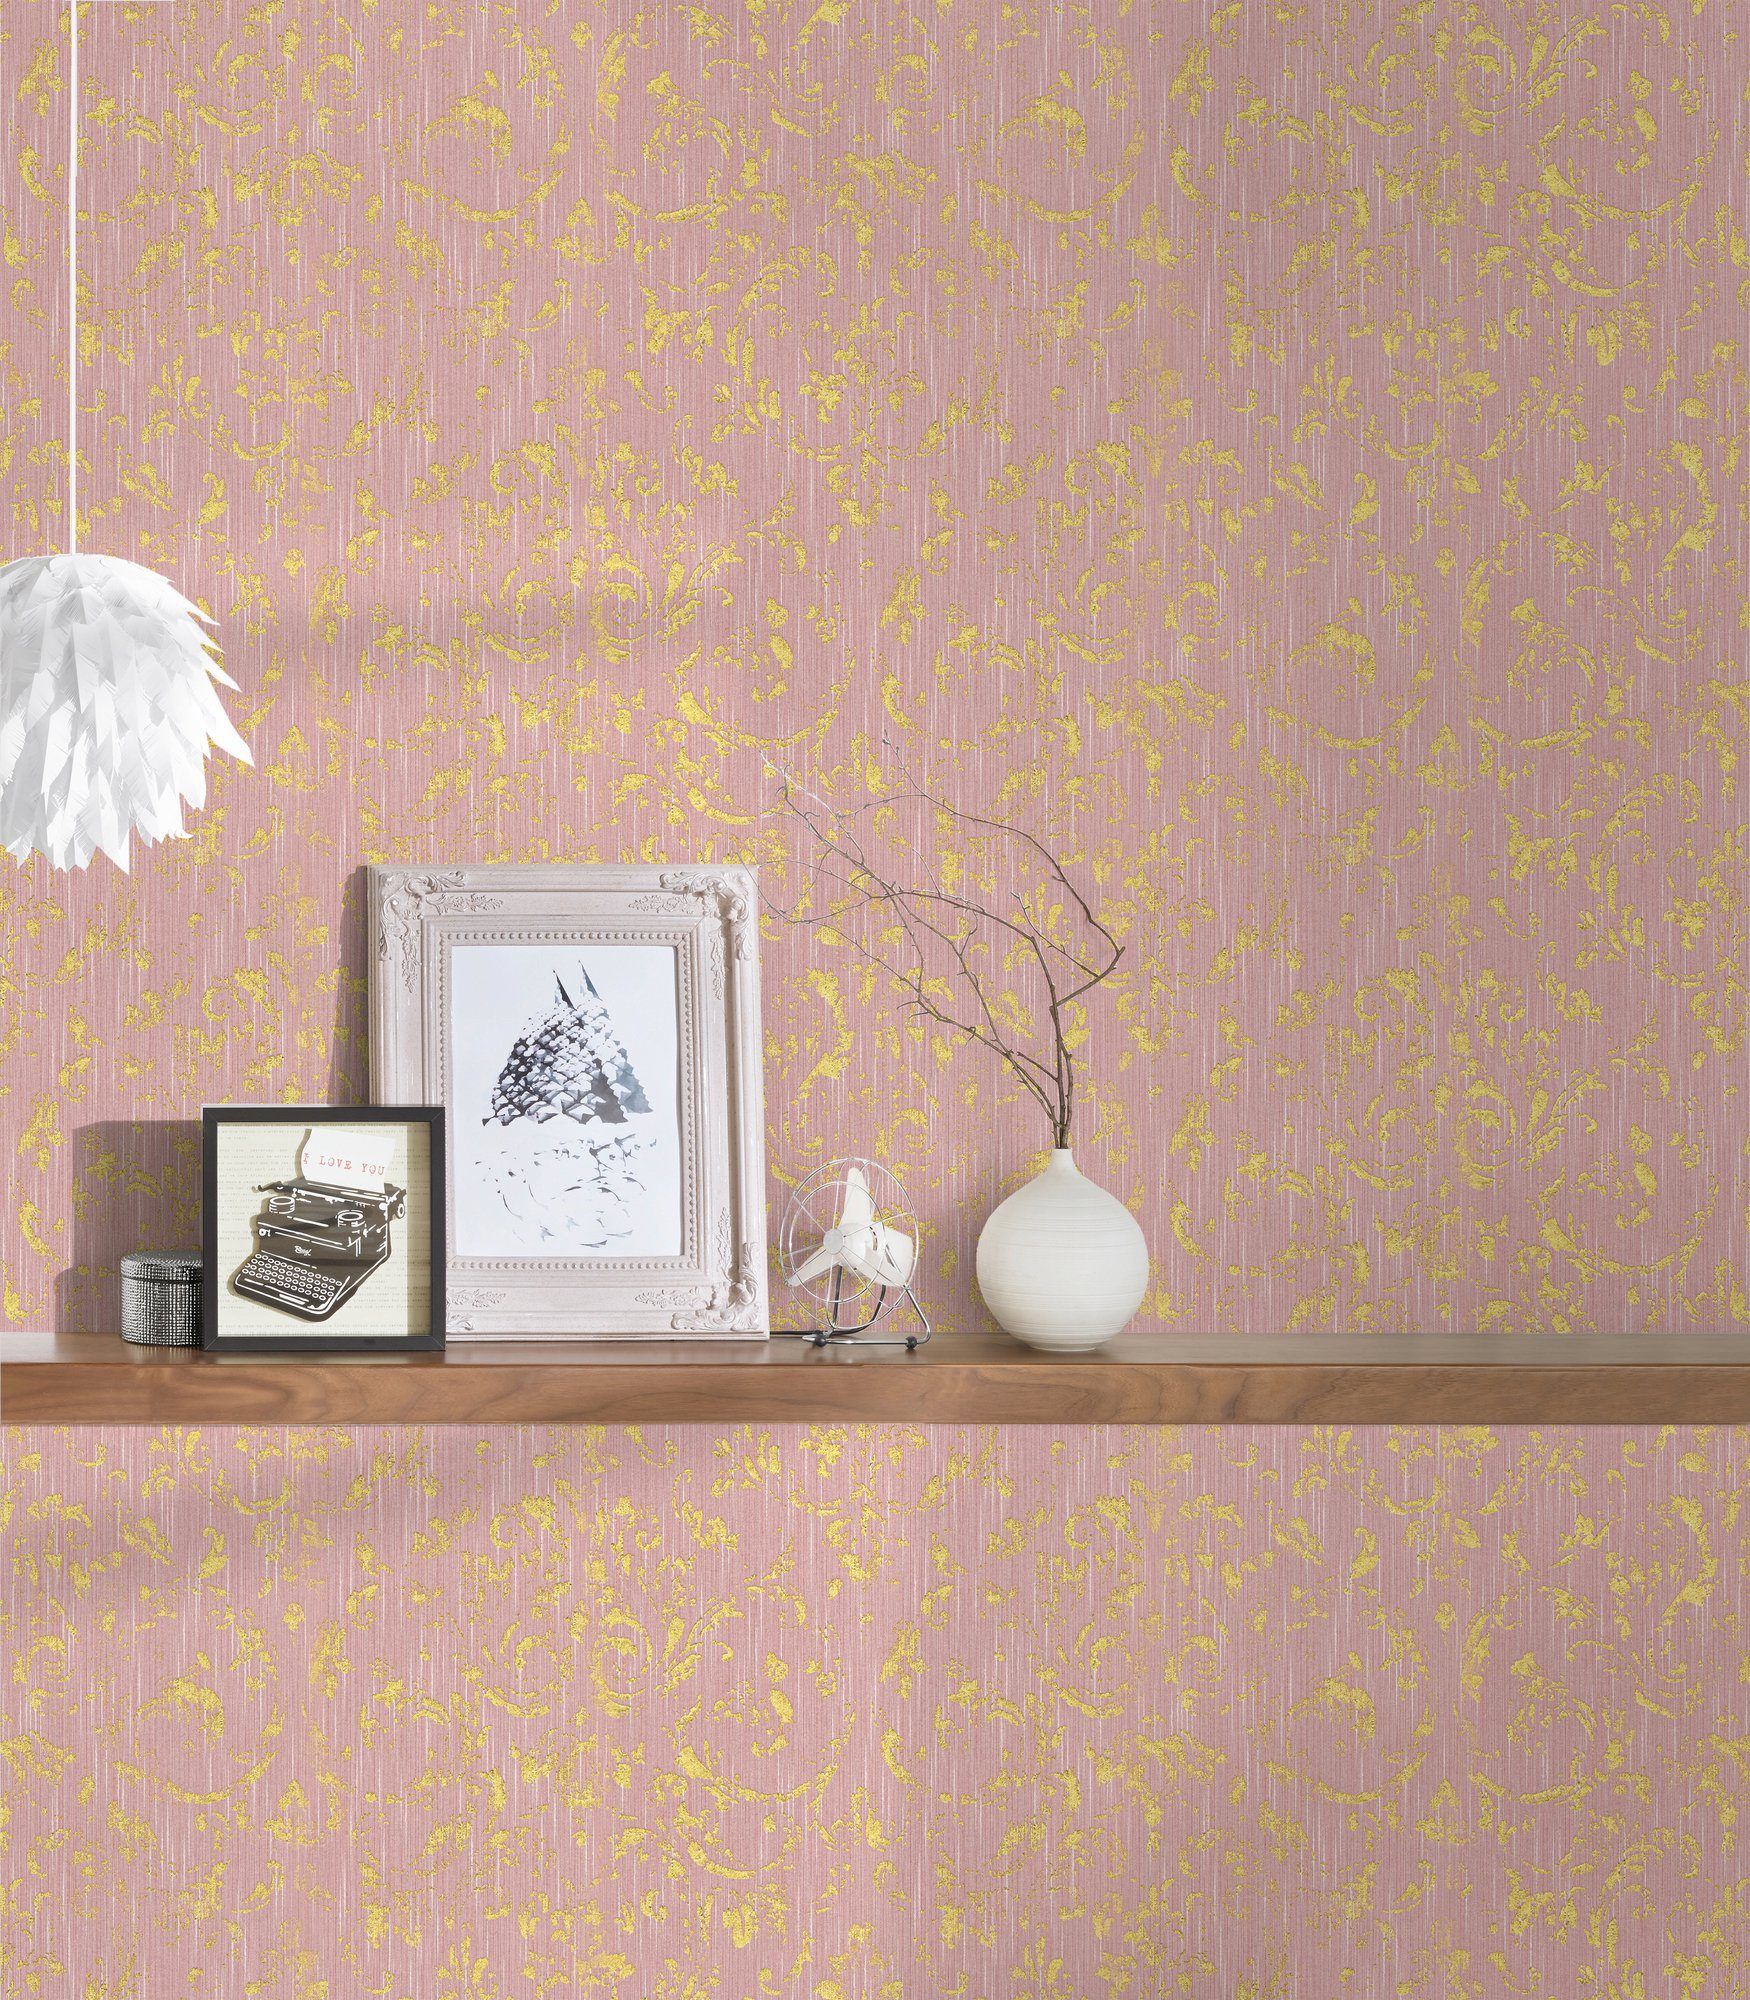 matt, Textiltapete rosa/gold Barock Tapete Ornament glänzend, Silk, Barock, Architects samtig, Paper Metallic Création A.S.